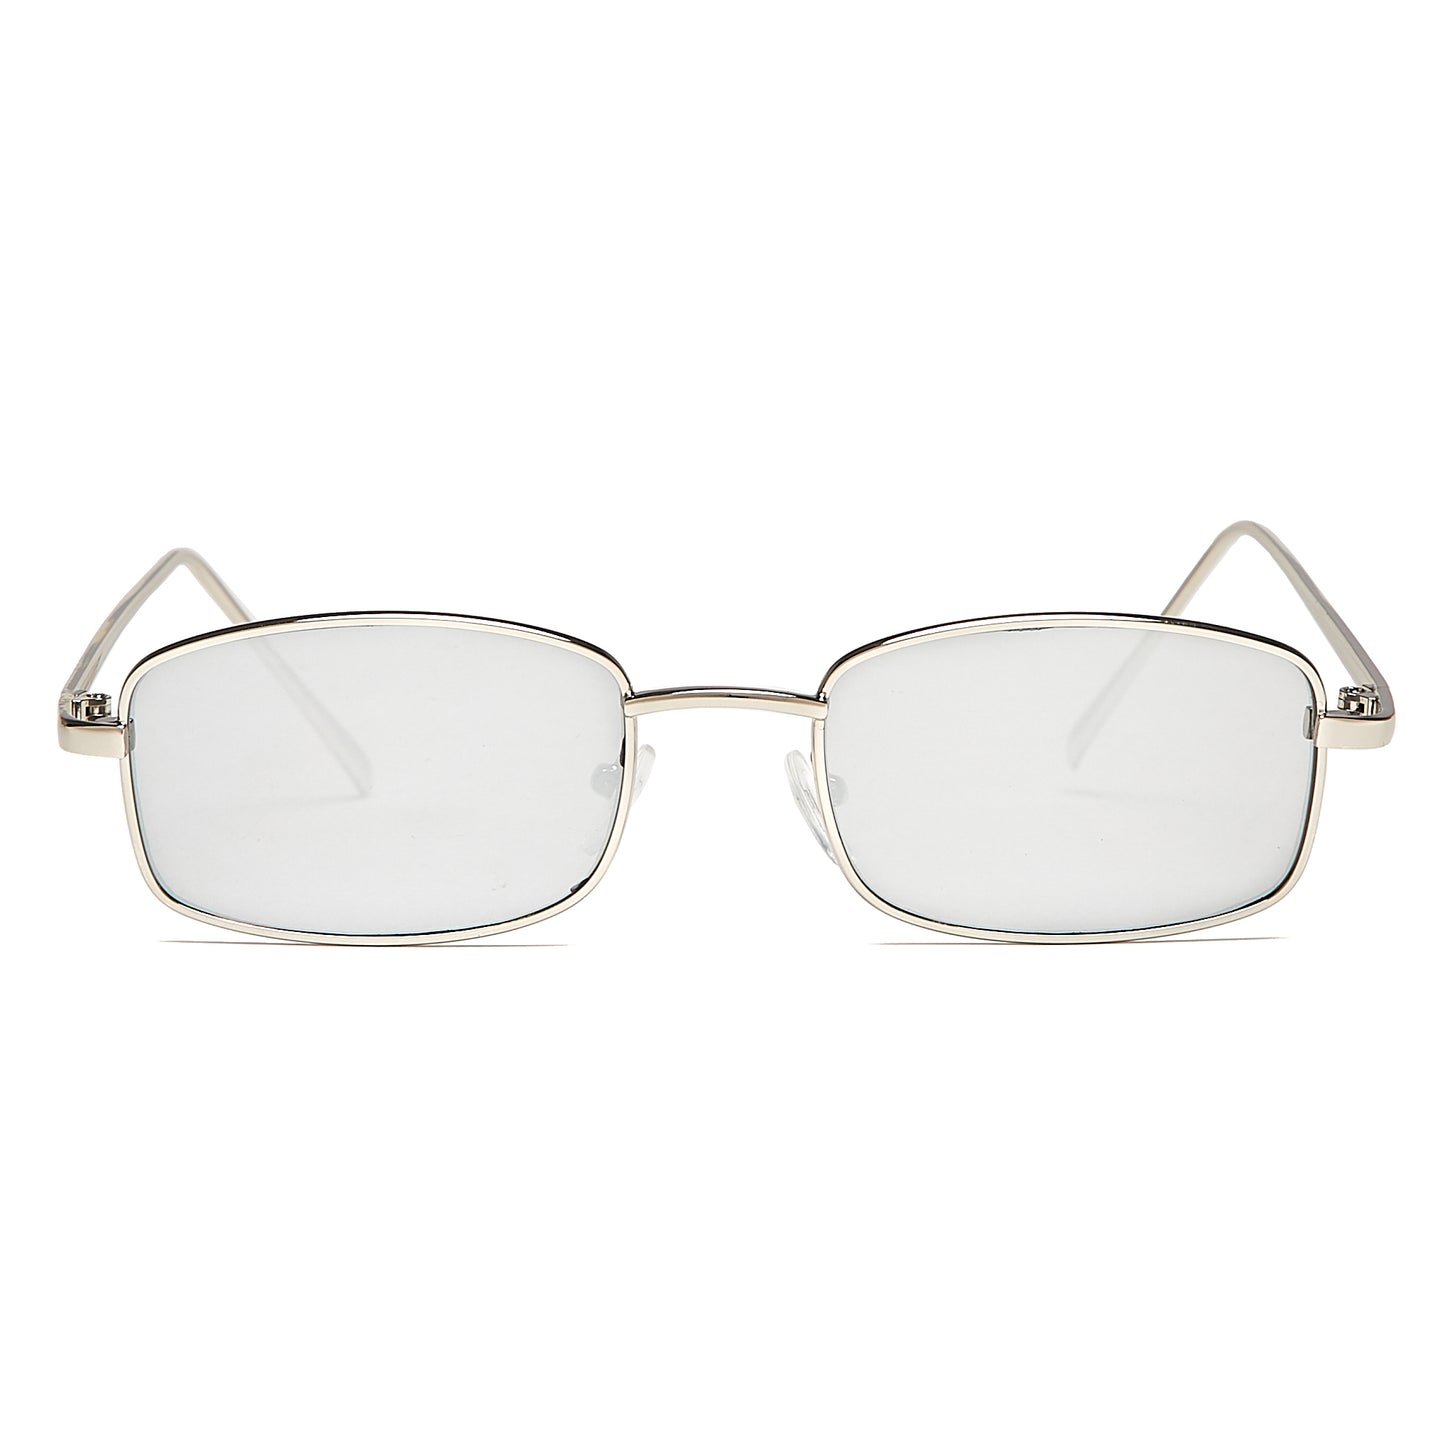 NEO (Size 51) UV-Protected Mens Vintage Rectangular Sunglasses - IDENTITY Apparel Shop